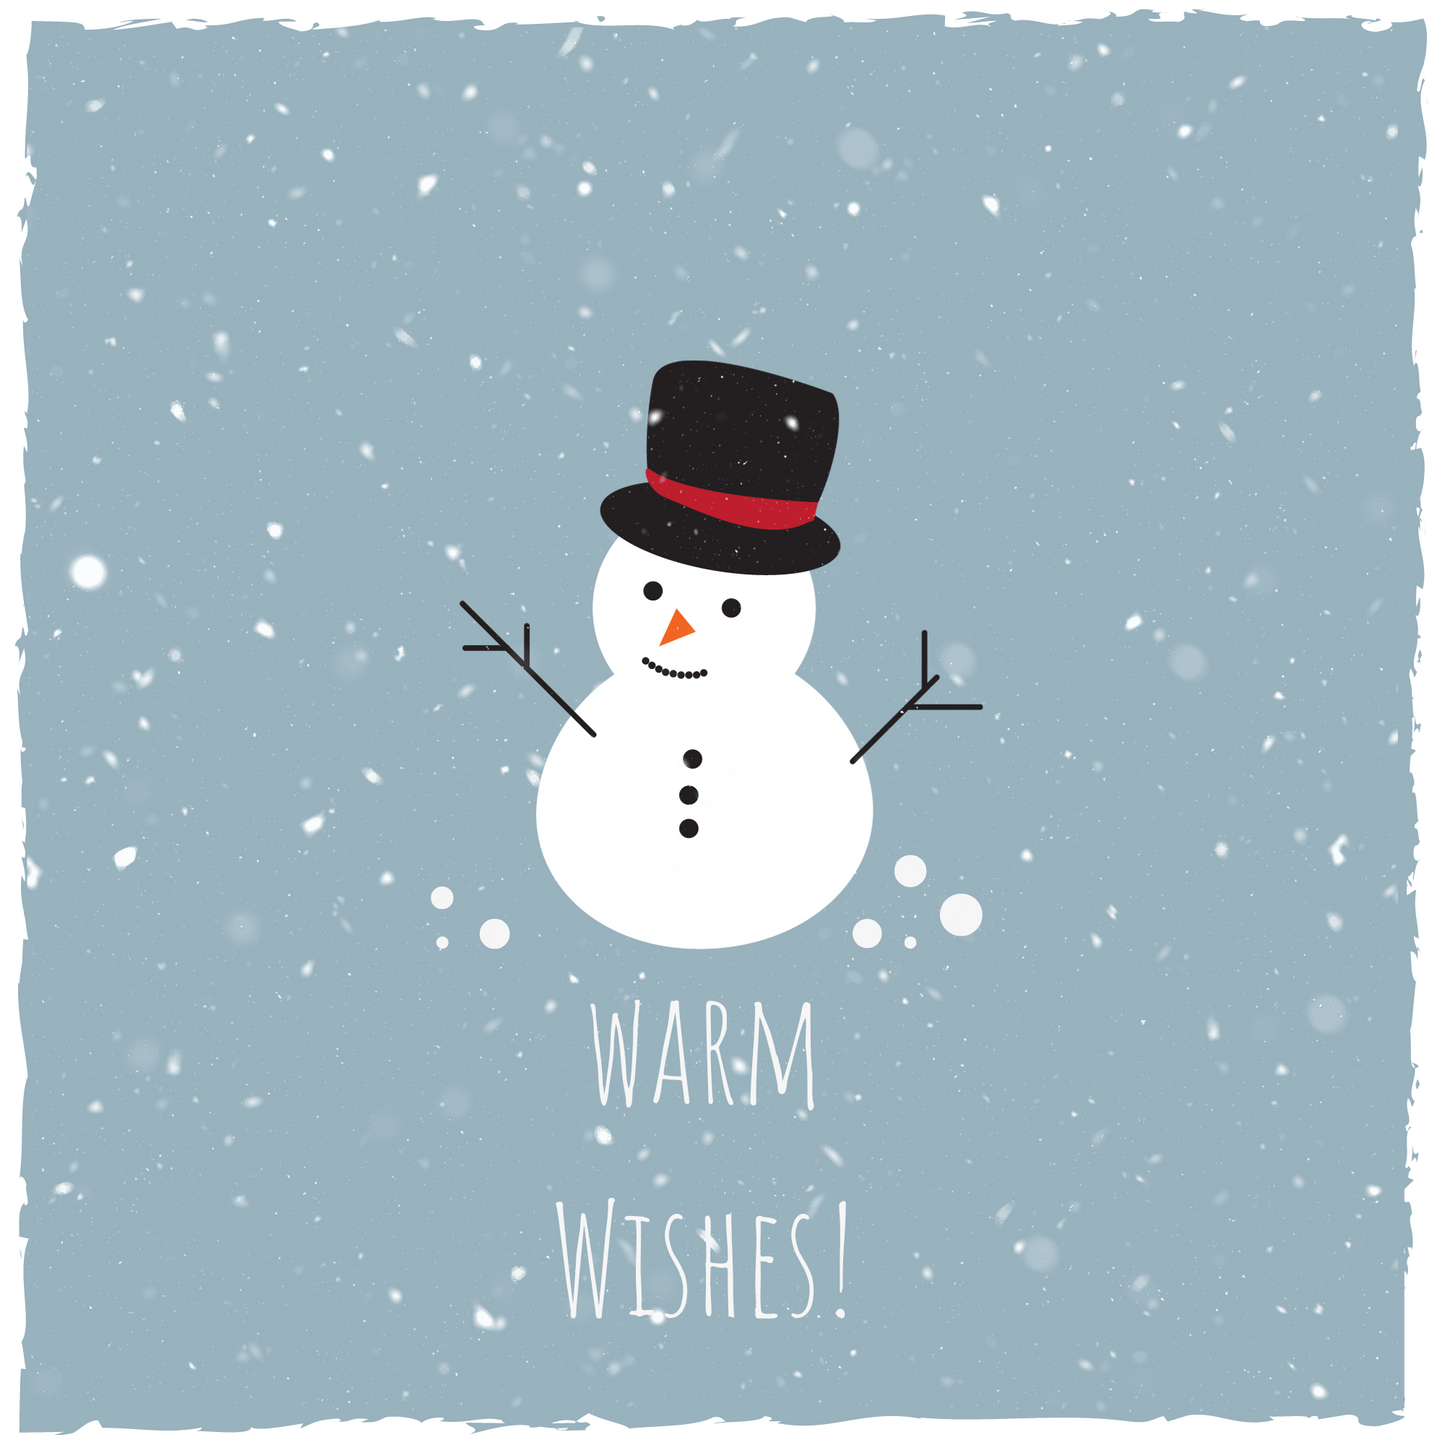 Warm Wishes!